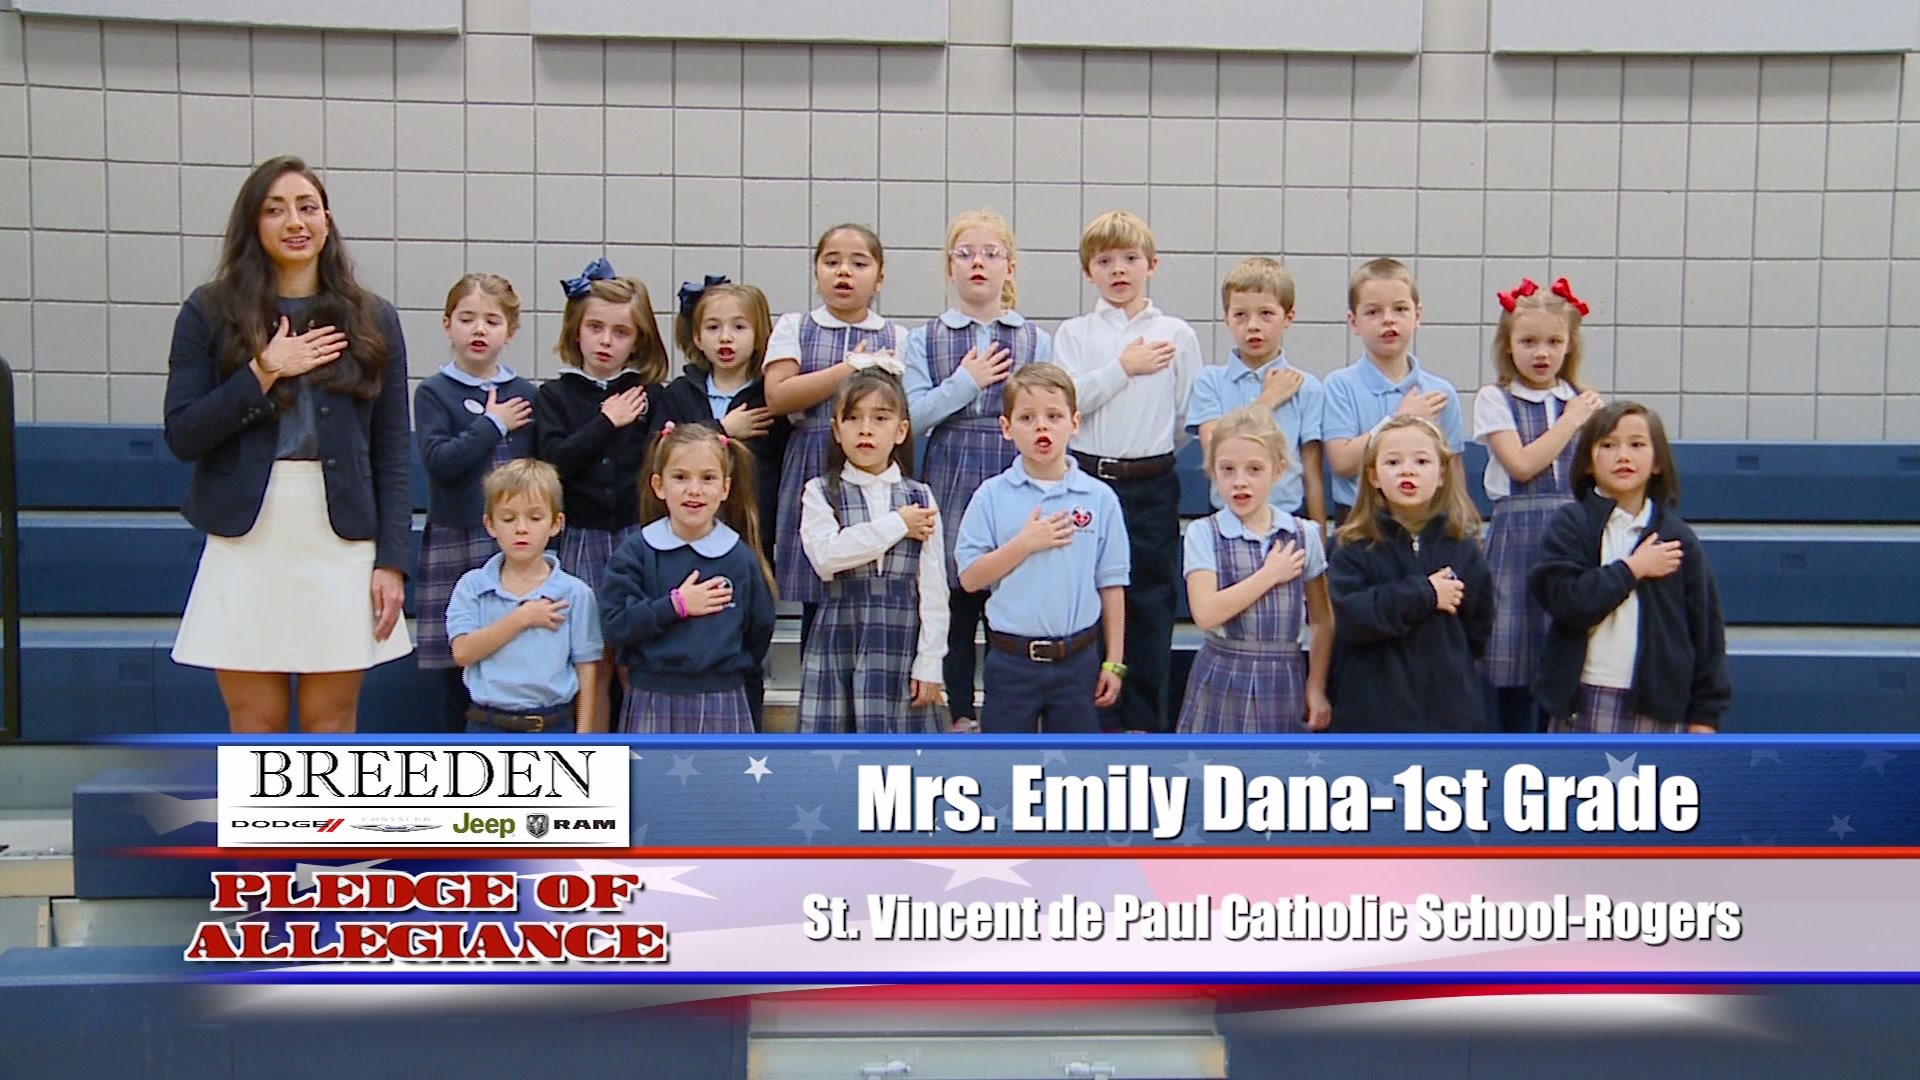 Mrs. Emily Dana  1st Grade St. Vincent de Paul Catholic School, Rogers